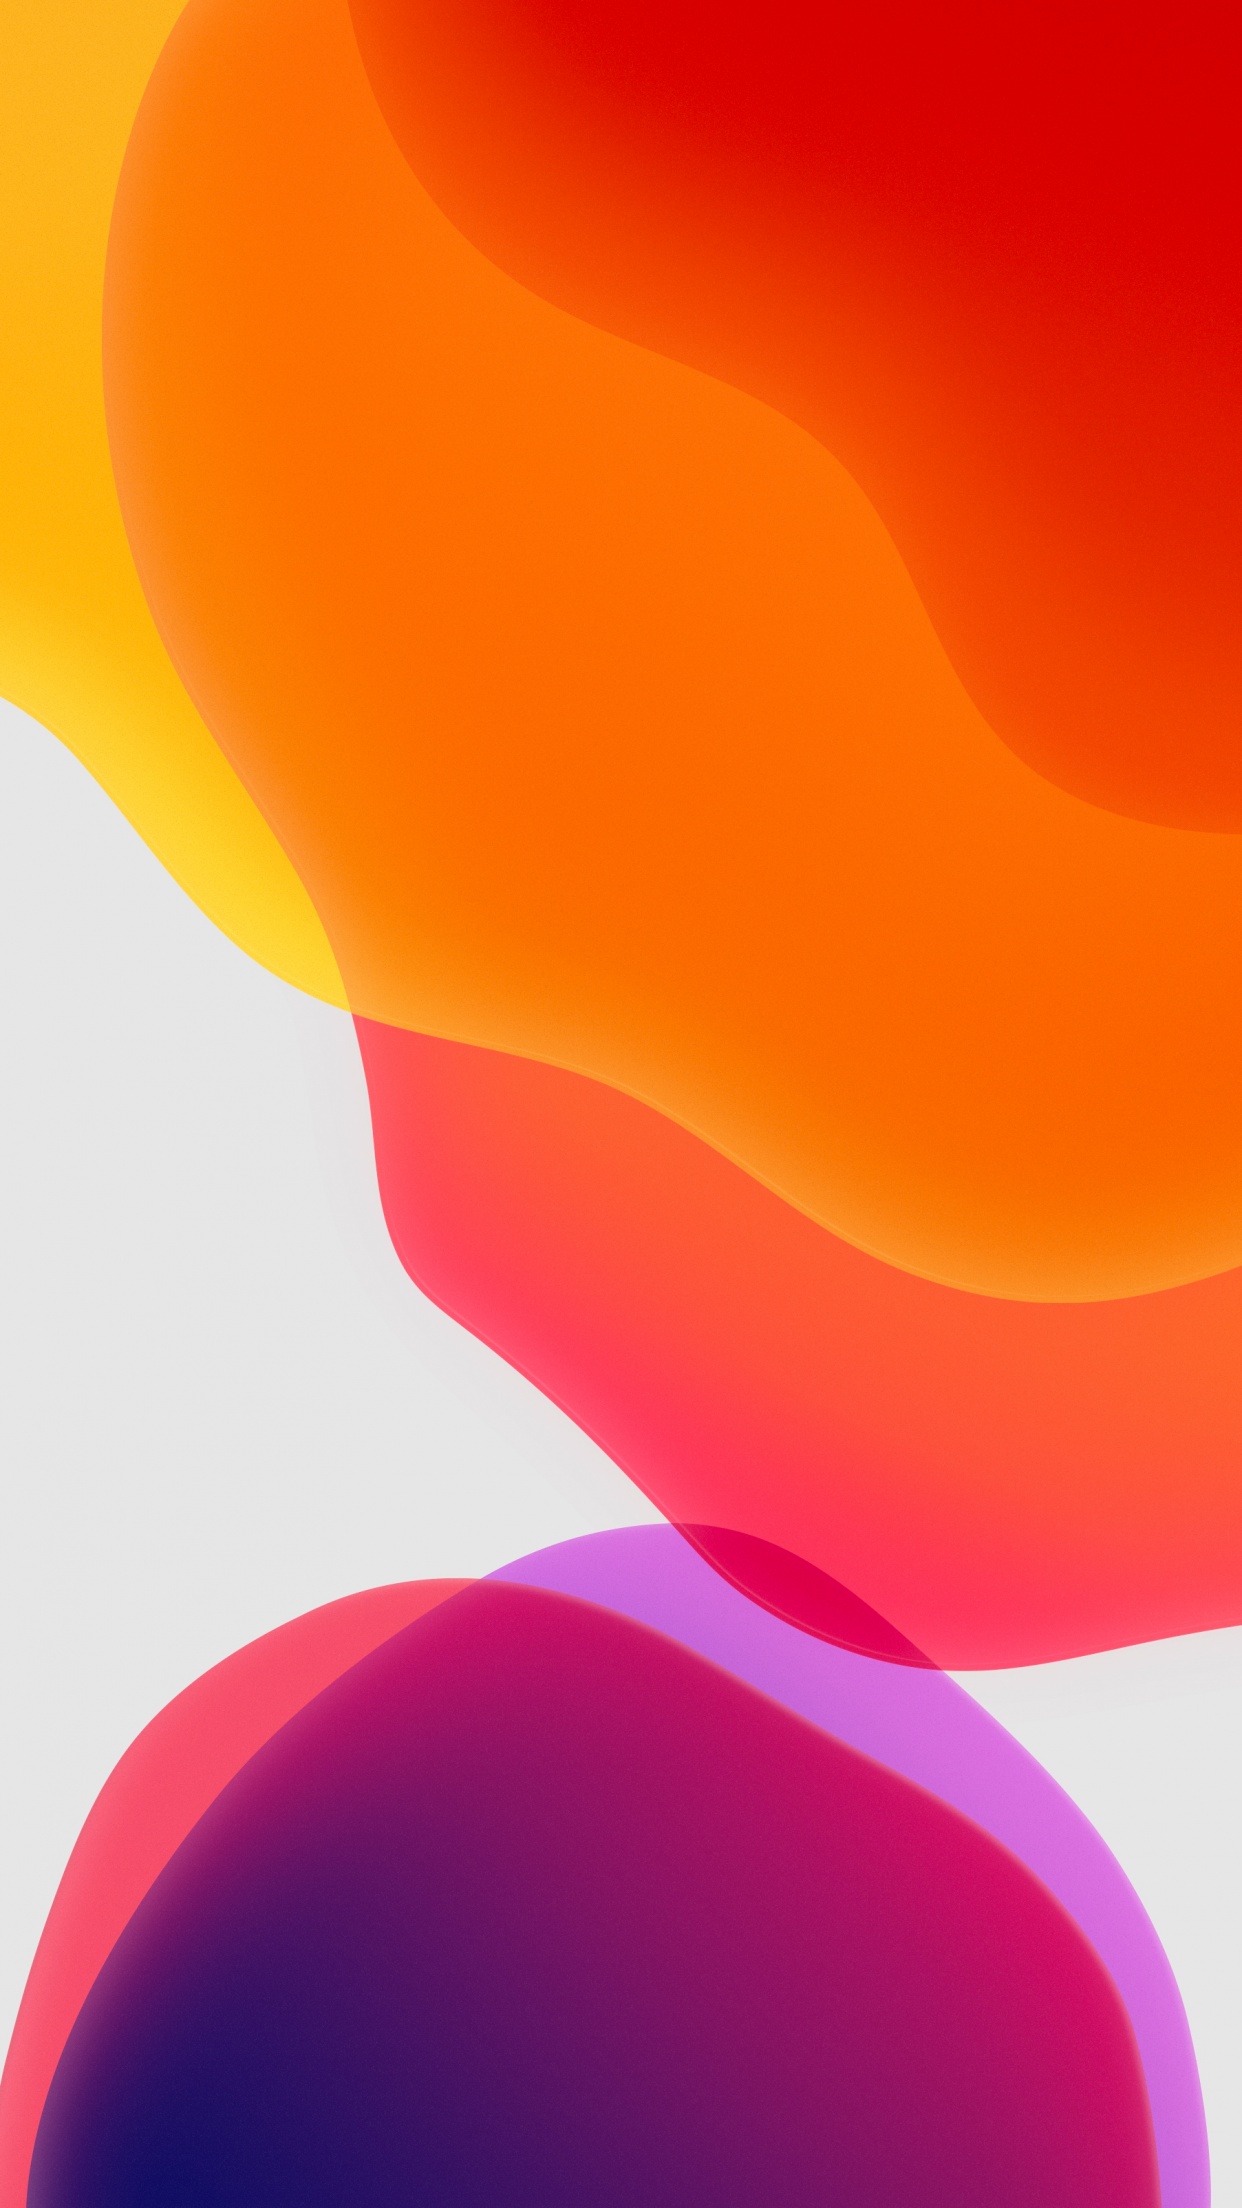 iPadOS Wallpaper 4K, Stock, Orange, Abstract, #1551